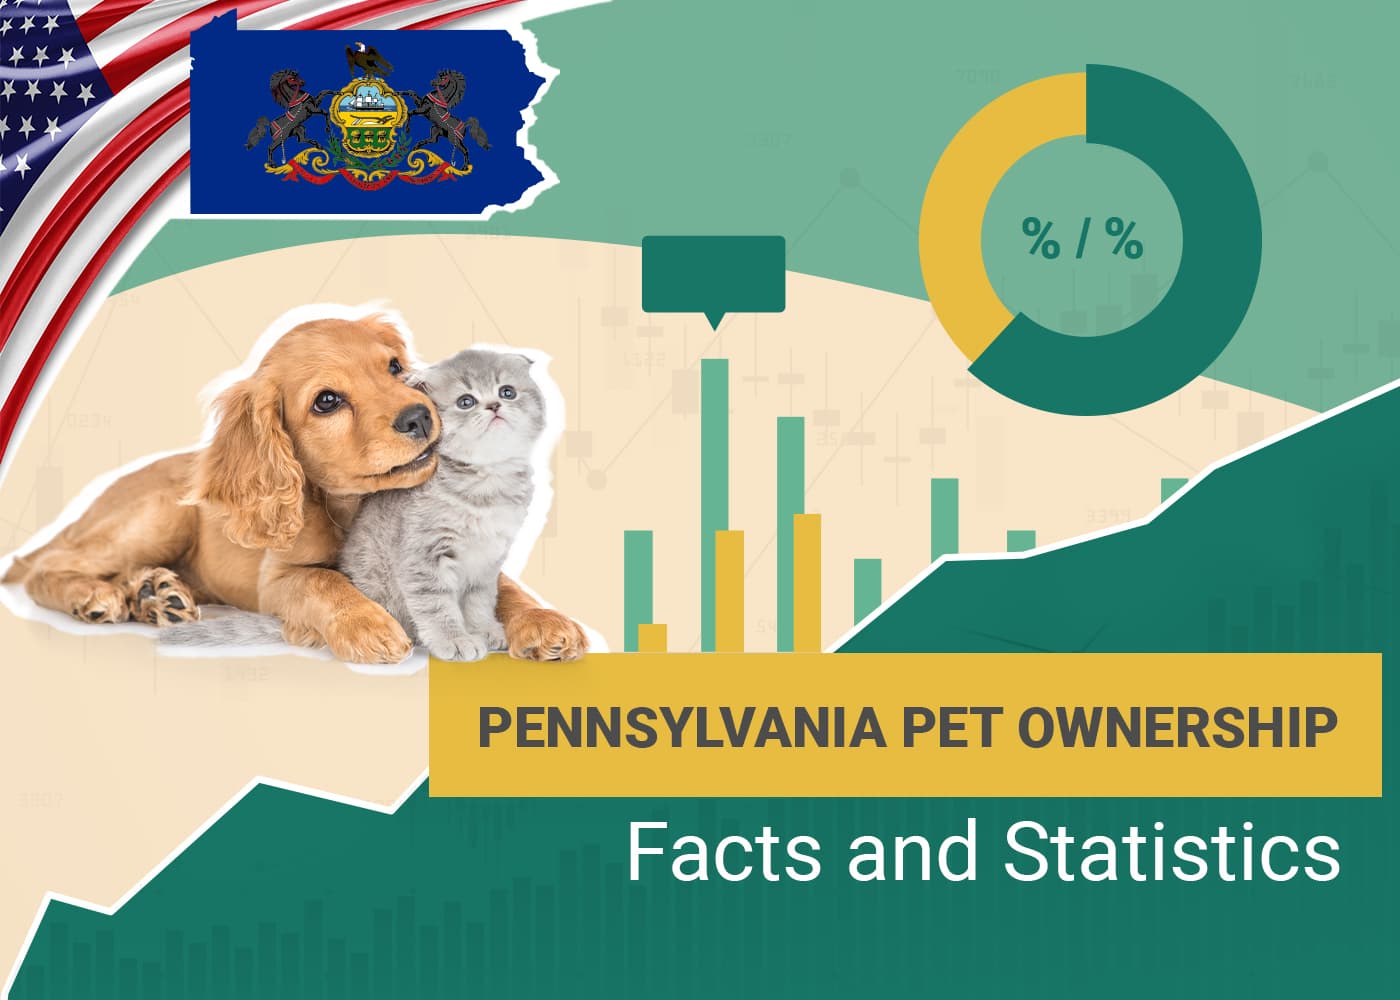 Pennysylvania Pet Ownership Facts and Statistics